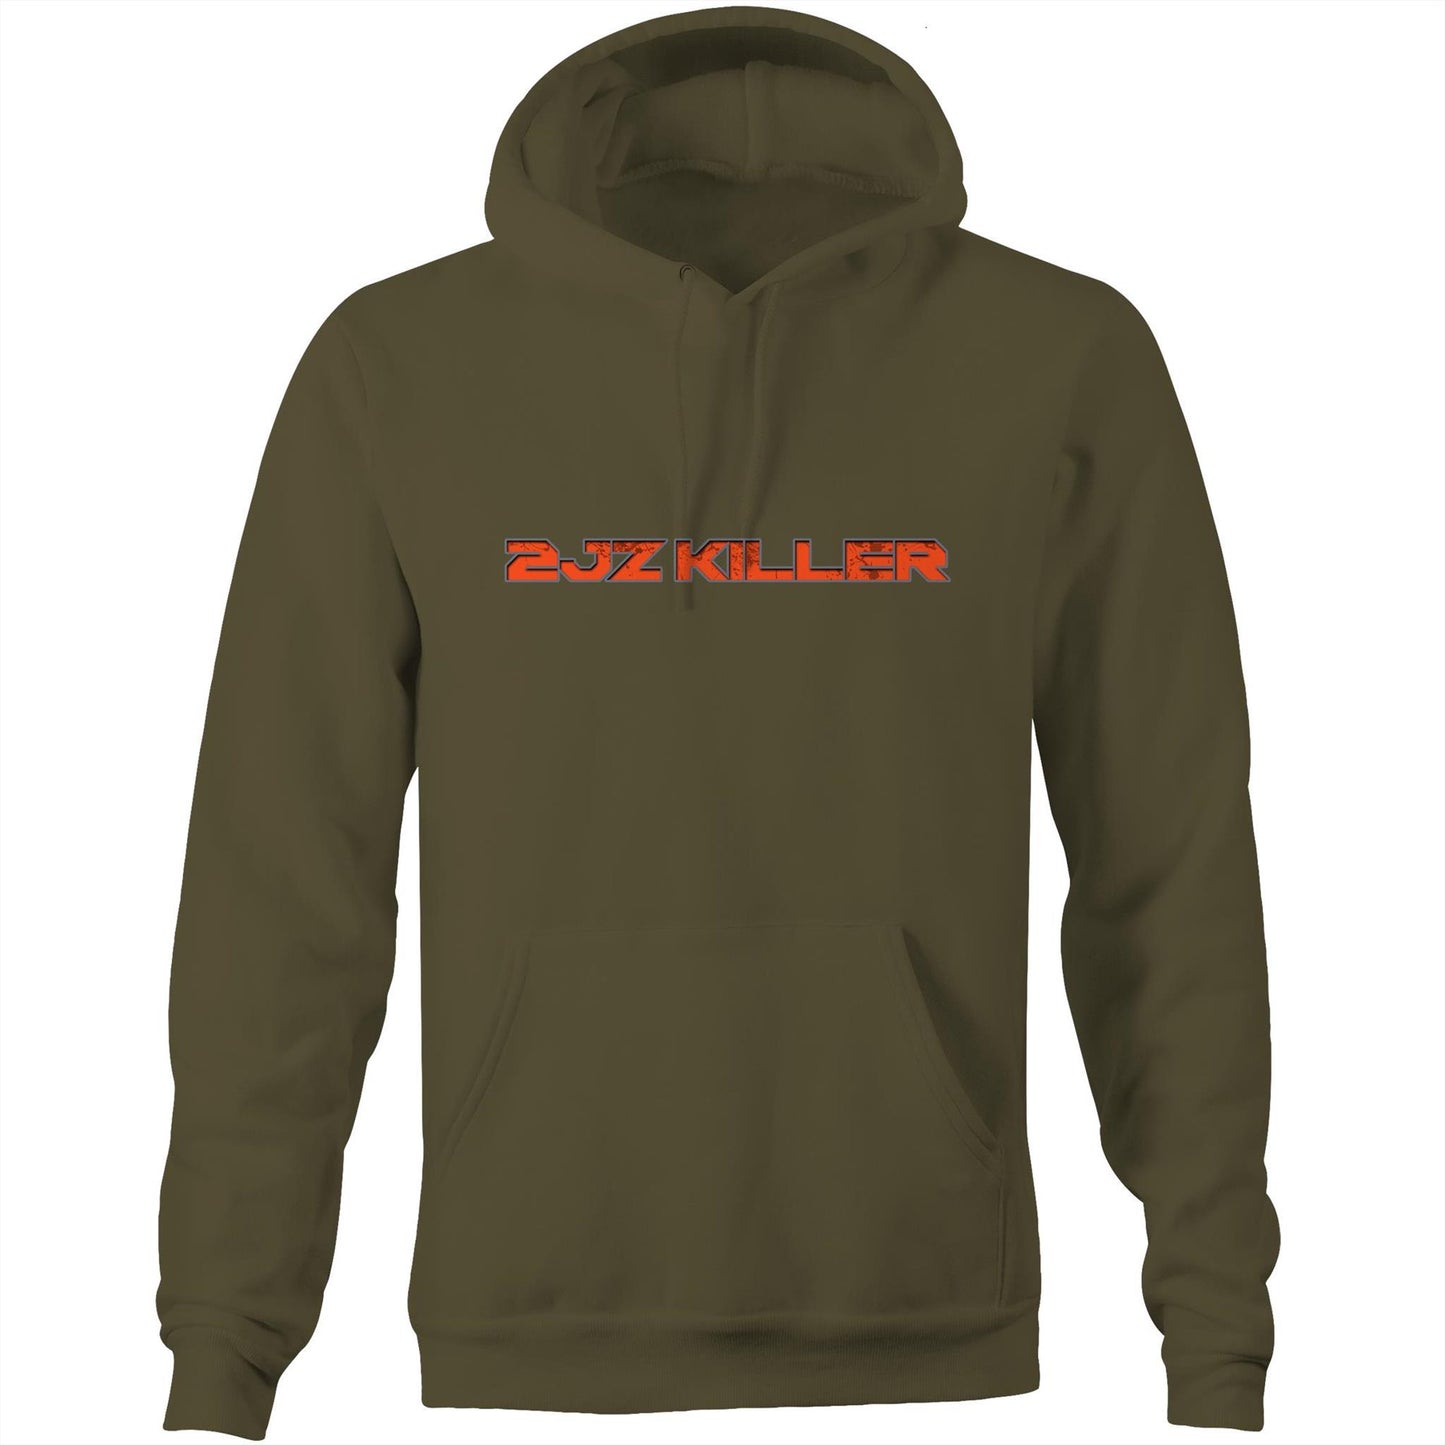 2JZ KILLER - Pocket Hoodie Sweatshirt